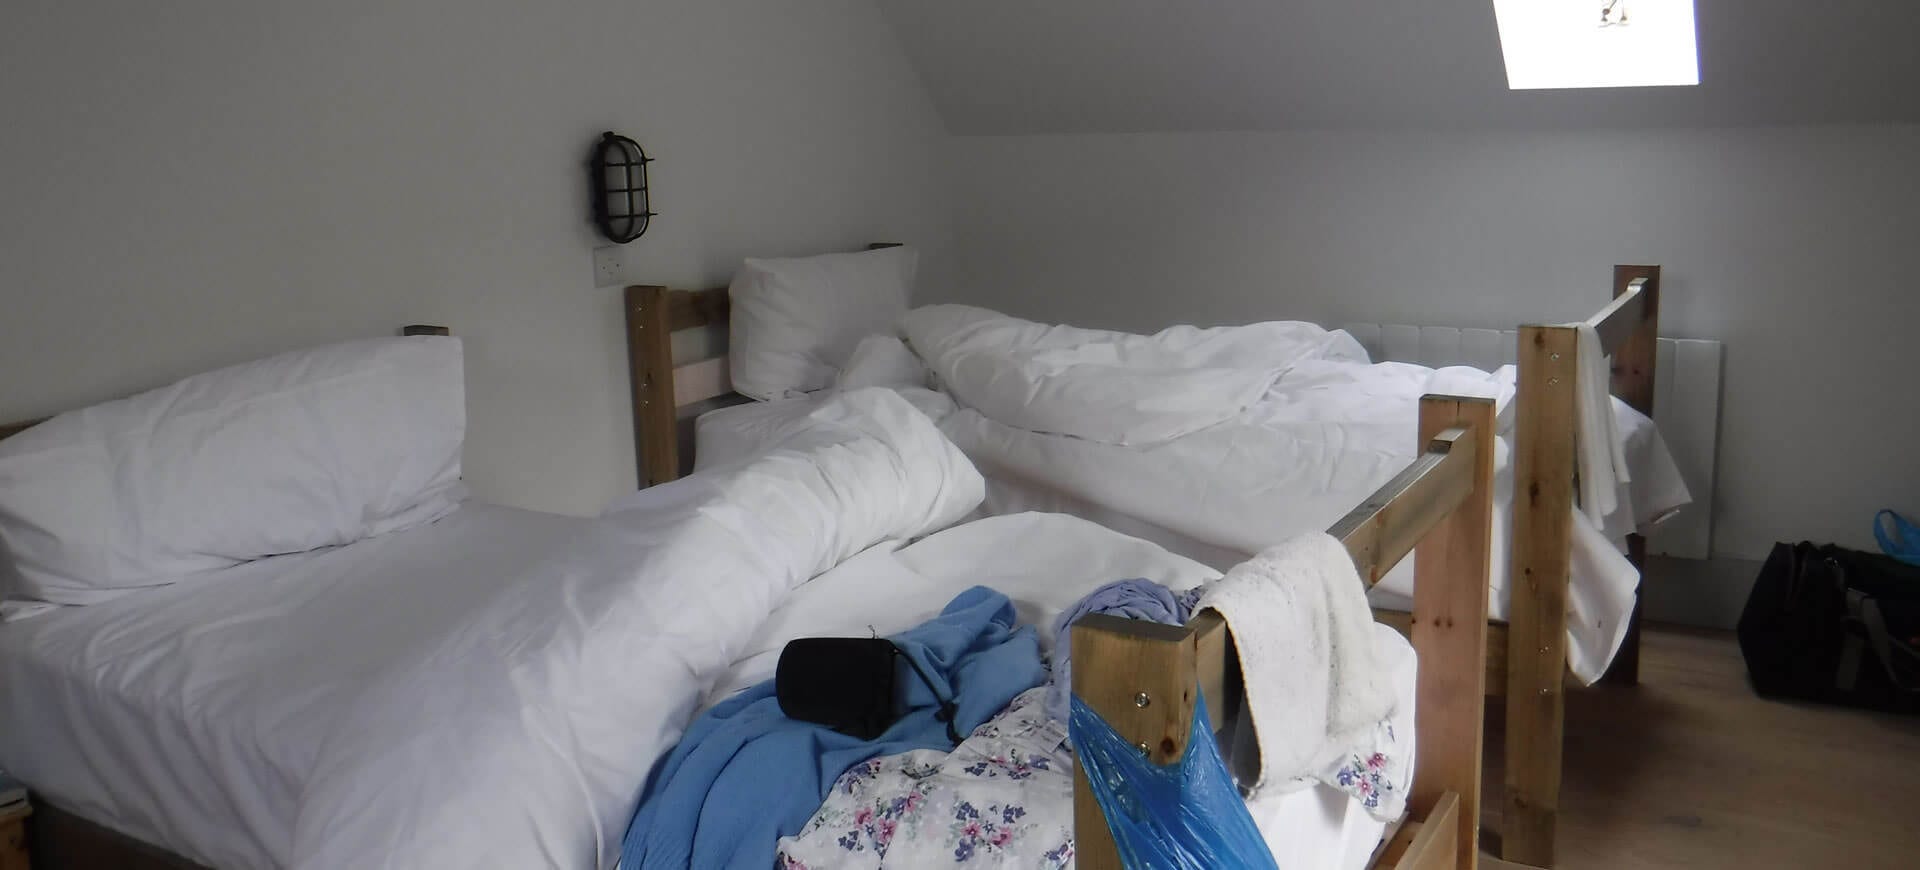 comfy beds at portsoy hostel